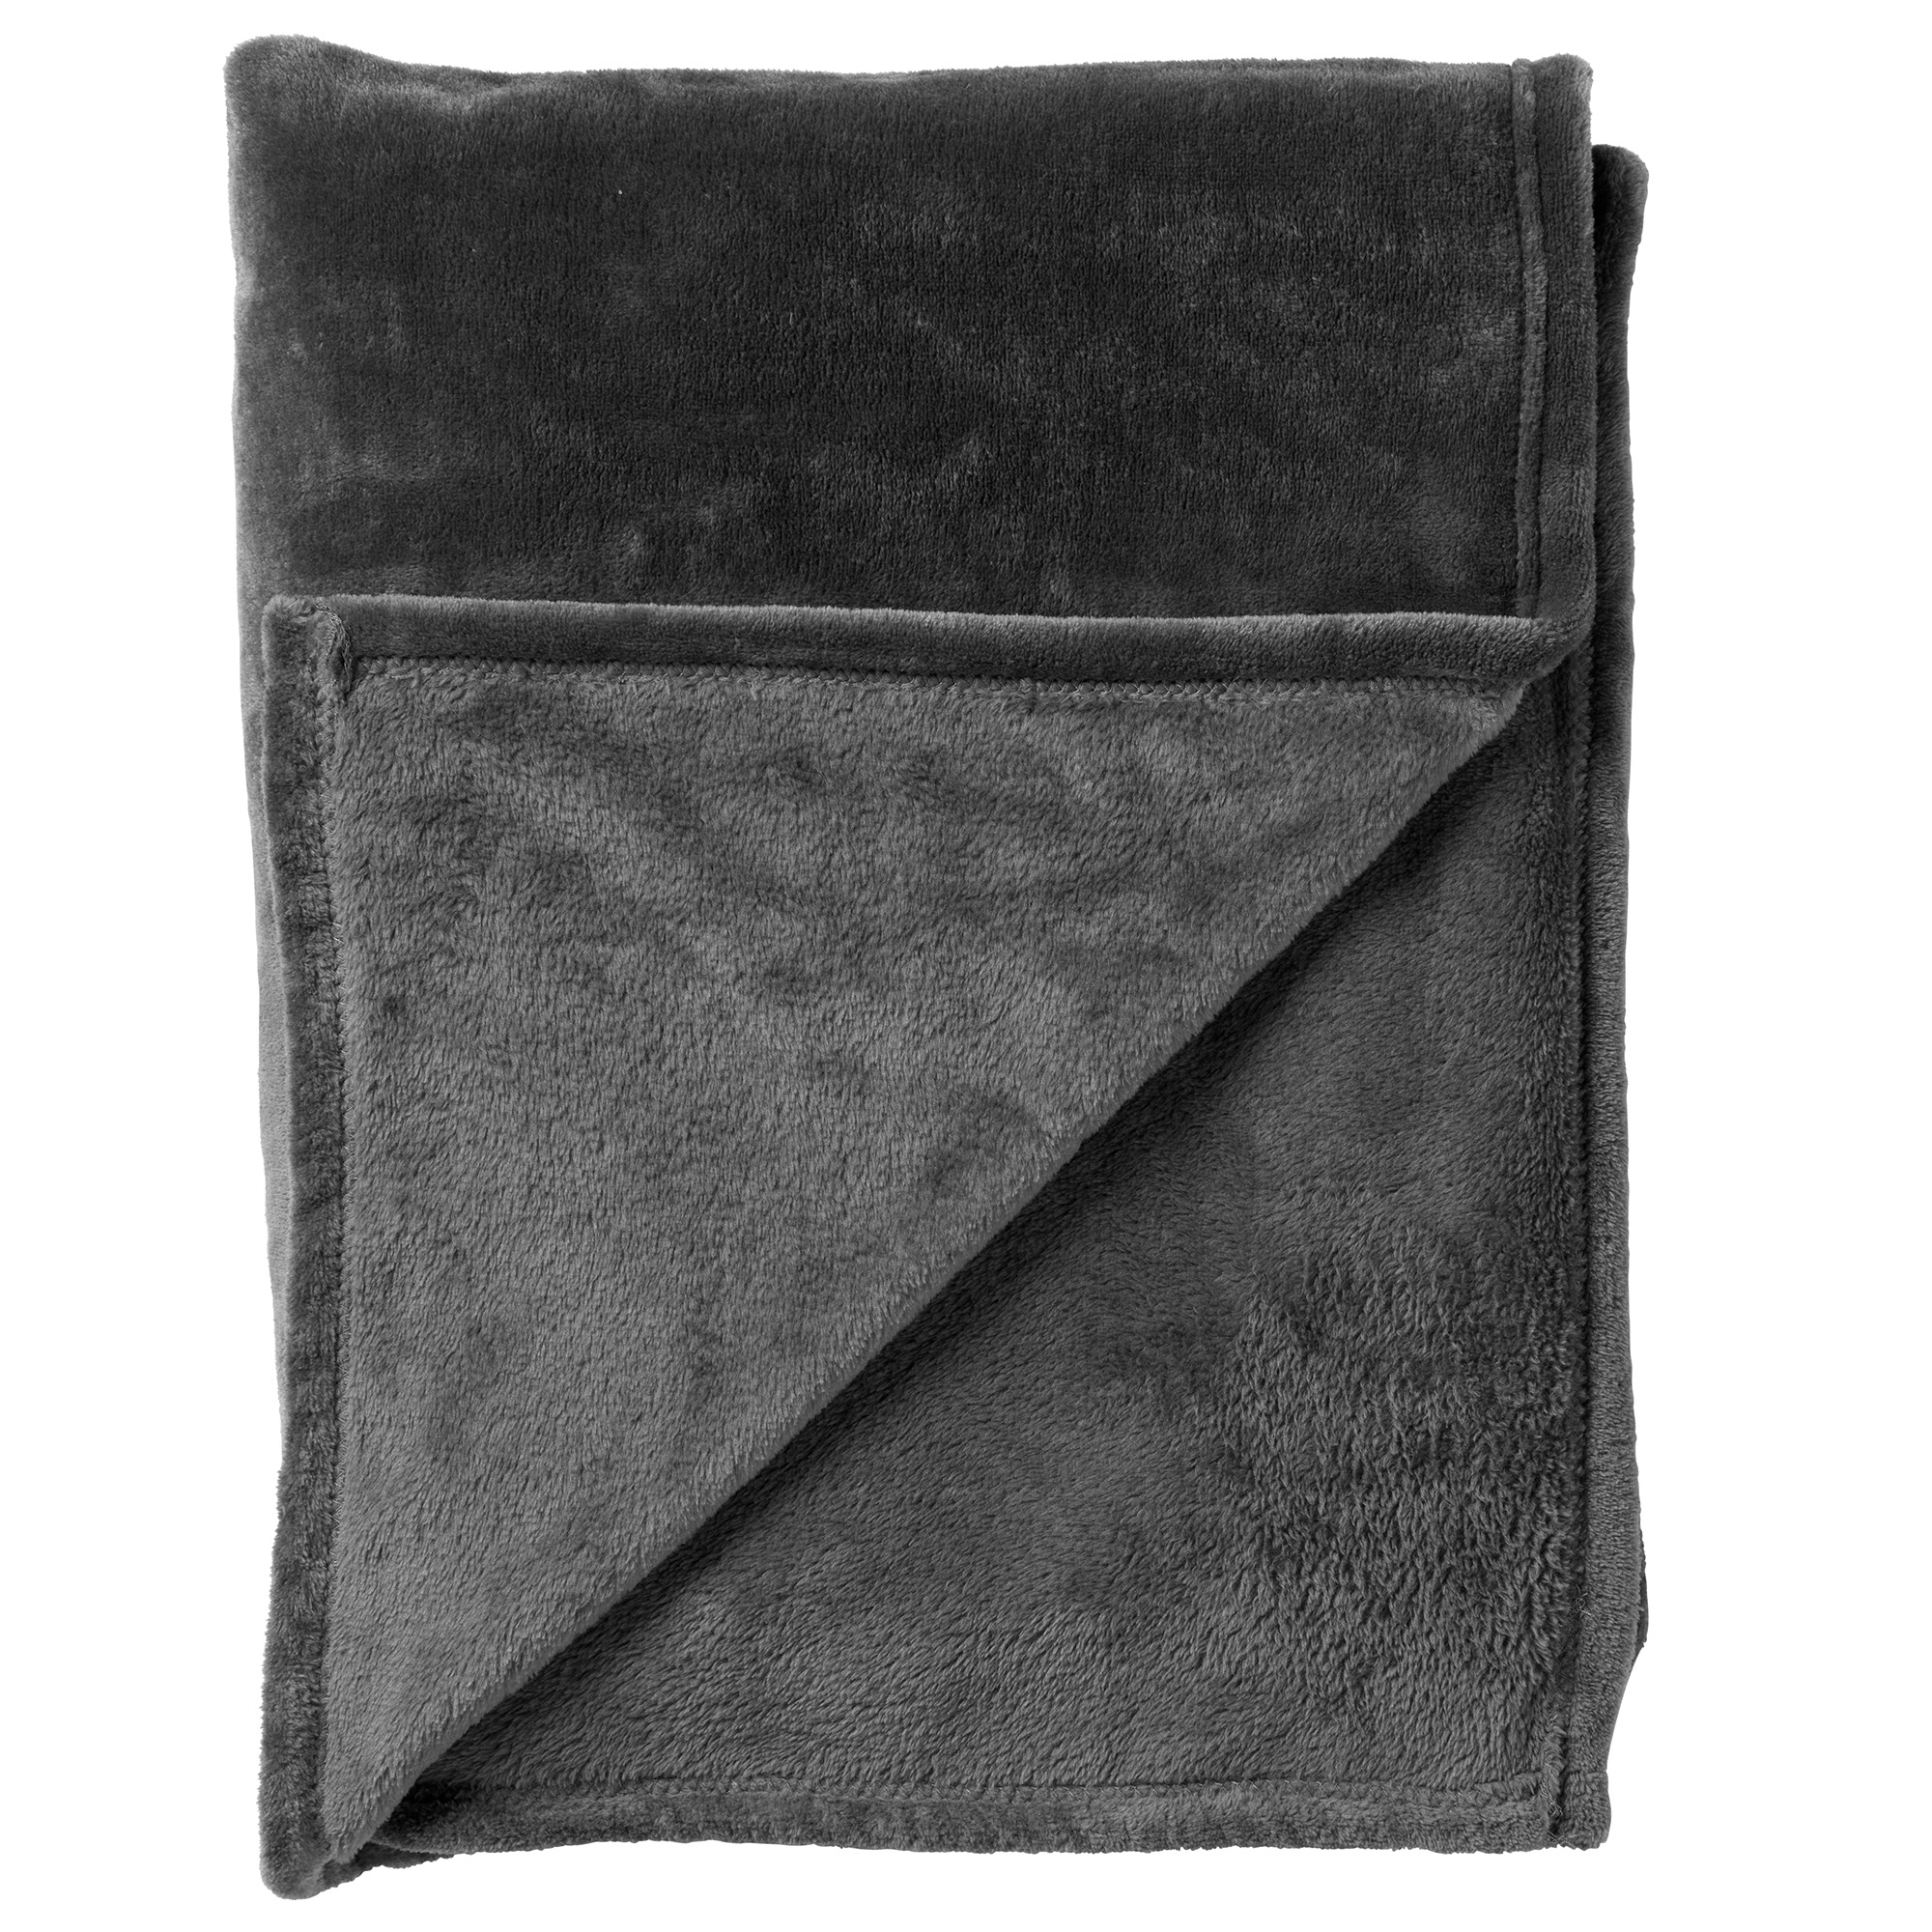 CHARLIE - Plaid 200x220 cm - extra grote fleece deken - effen kleur - Charcoal Gray - antraciet